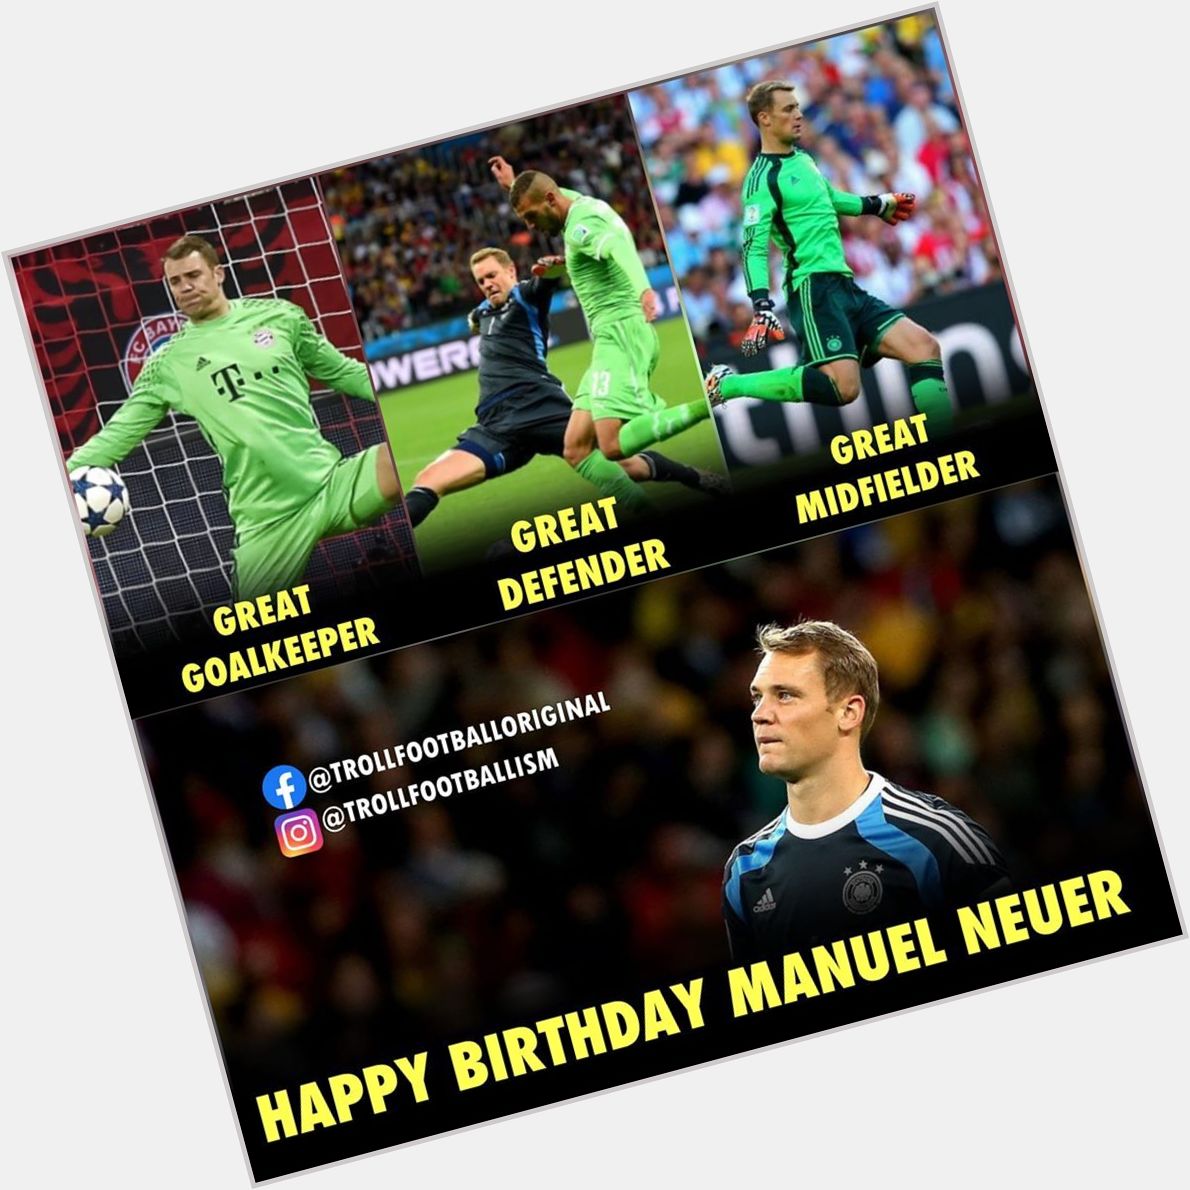 Happy birthday manuel neuer! 